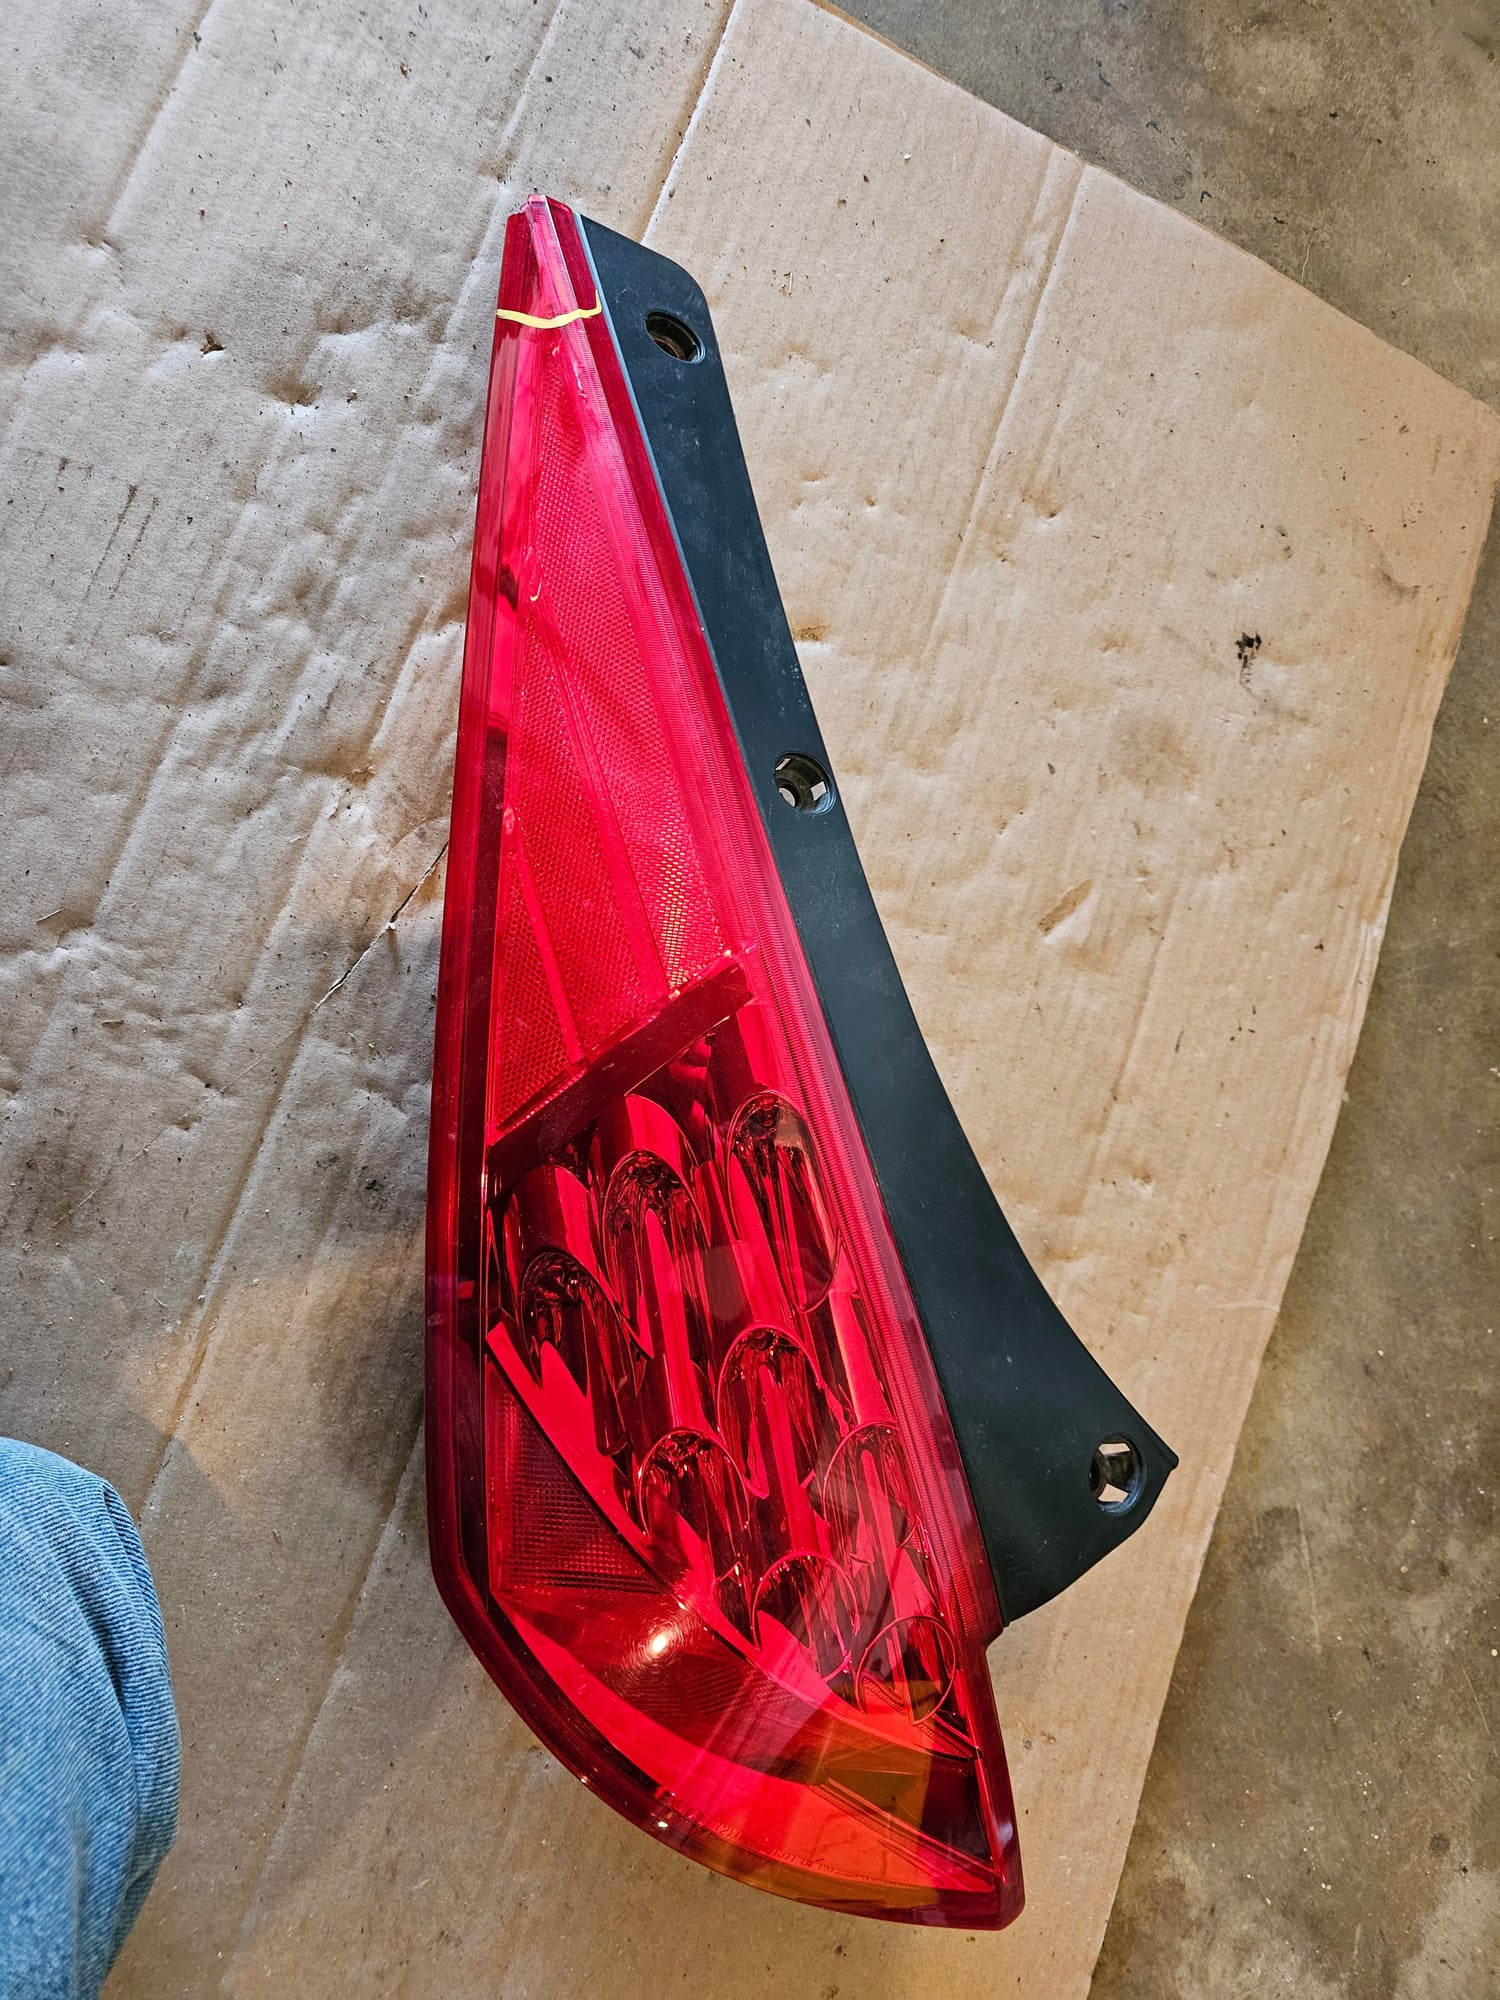 Lights - Driver side Tail light - Used - 2005 to 2008 Nissan 350Z - Rocky Mount, VA 24151, United States